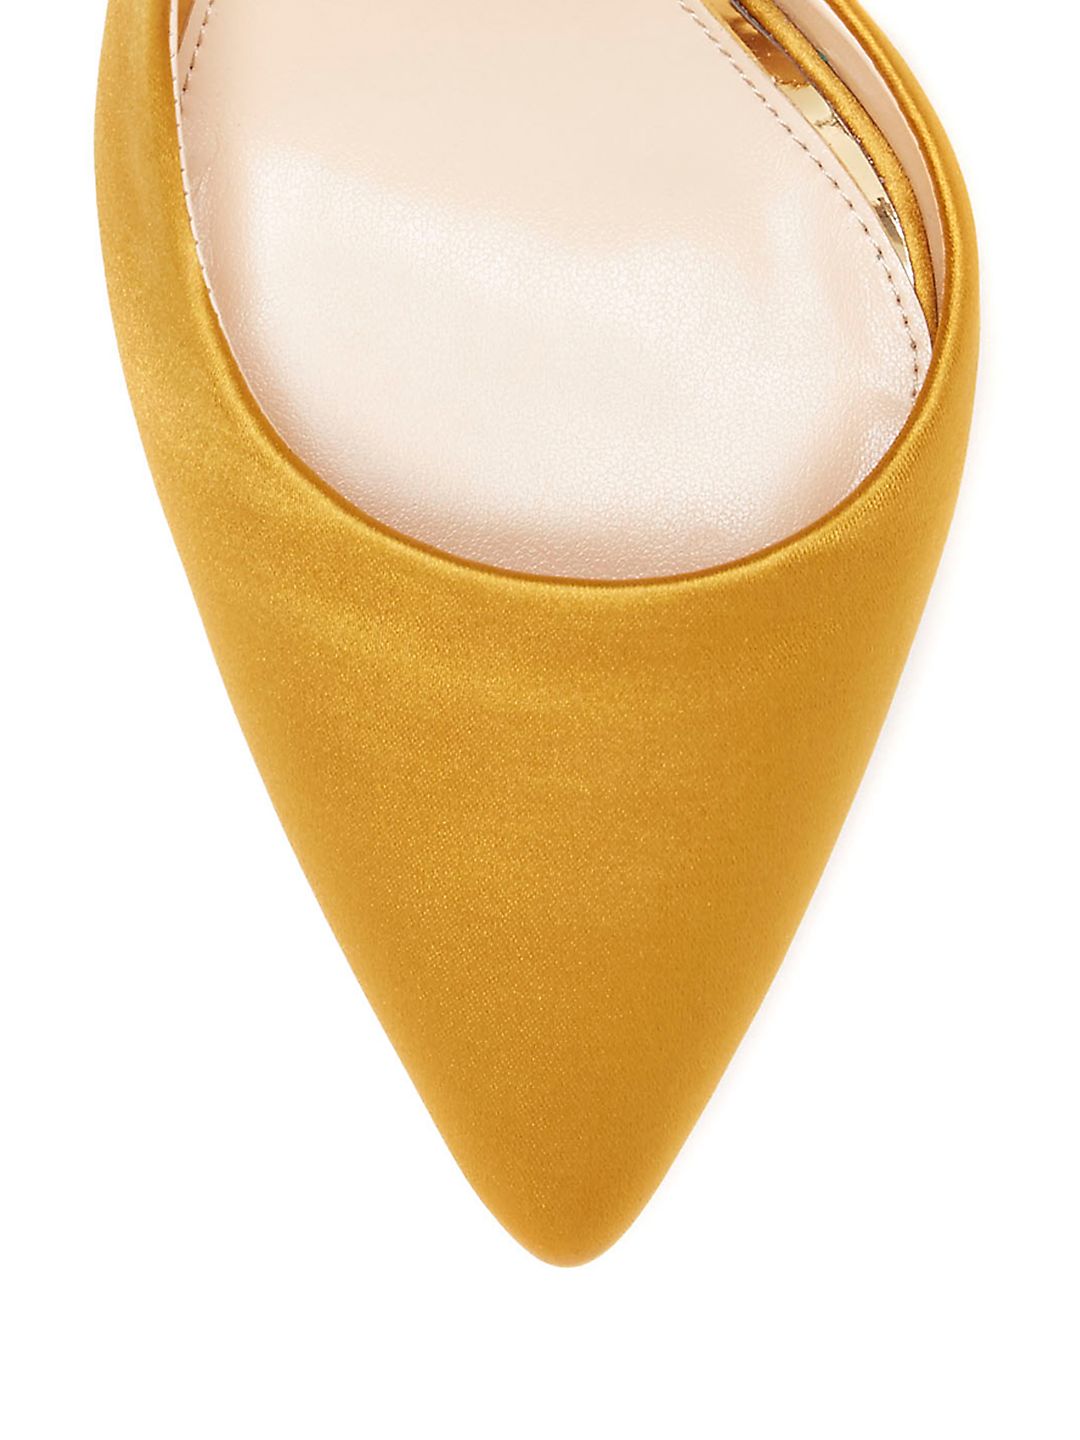 Jessica Simpson Women's Pheona D'Orsay Slip On Dress Pump Pink Patent Size 5 - image 4 of 4